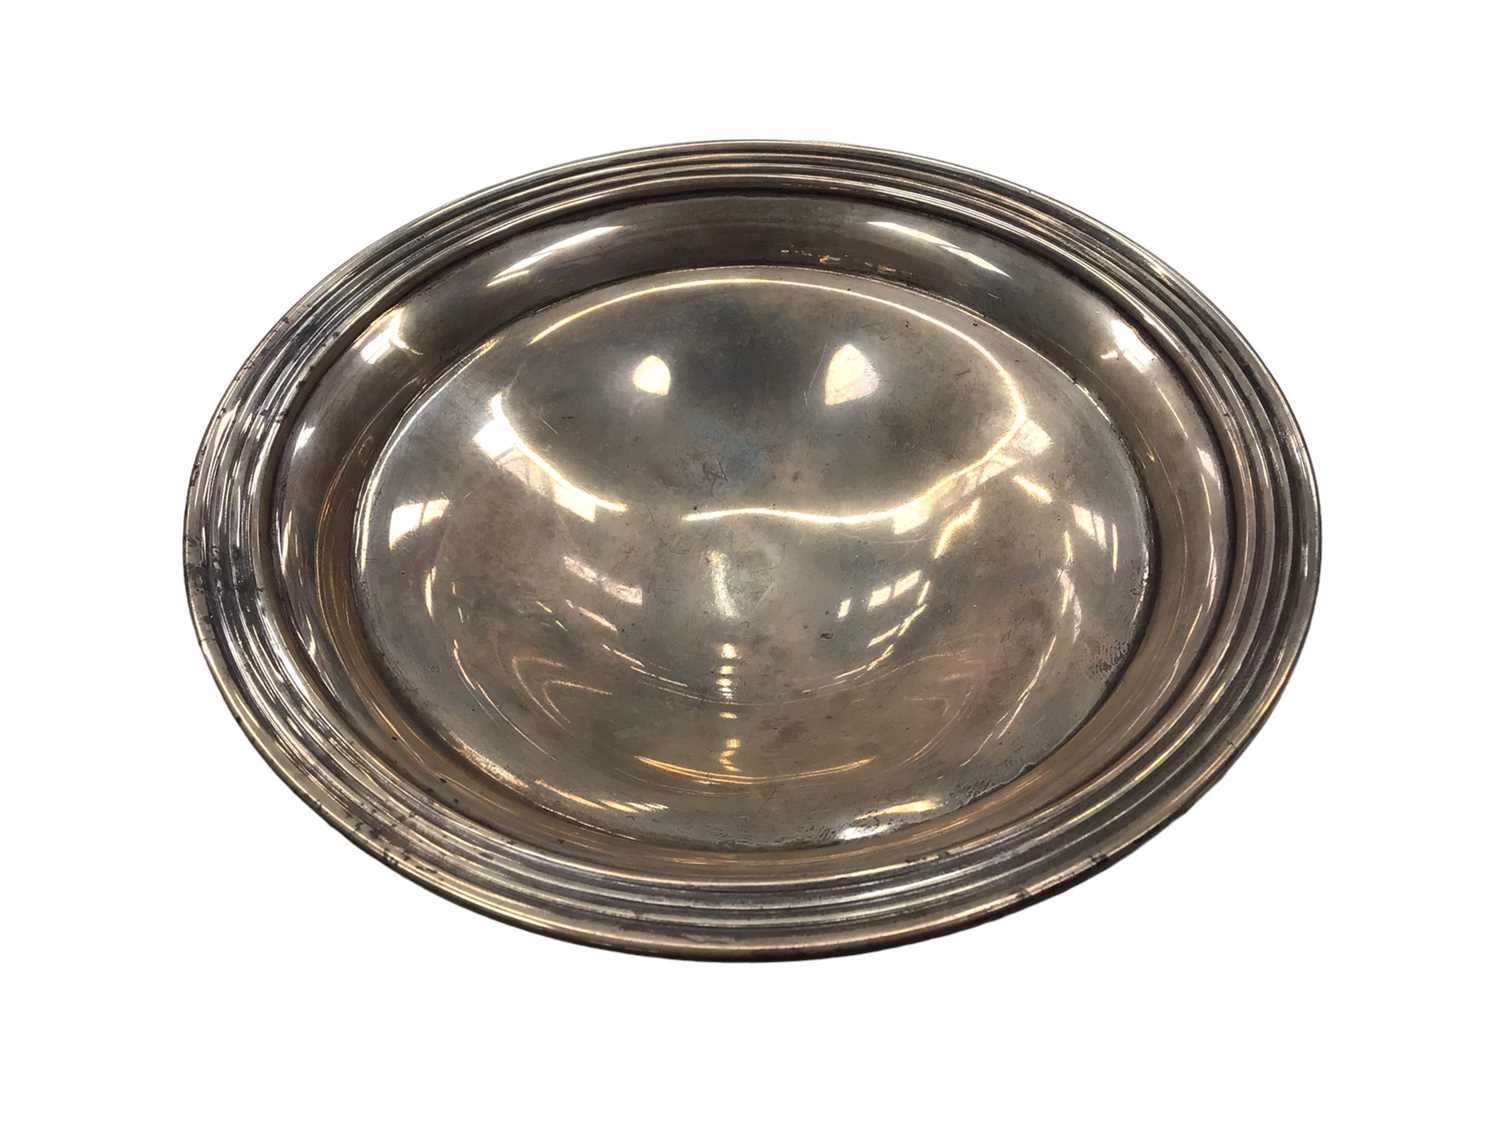 Silver pedestal bowl (London 1910), 15cm diameter - Image 2 of 3